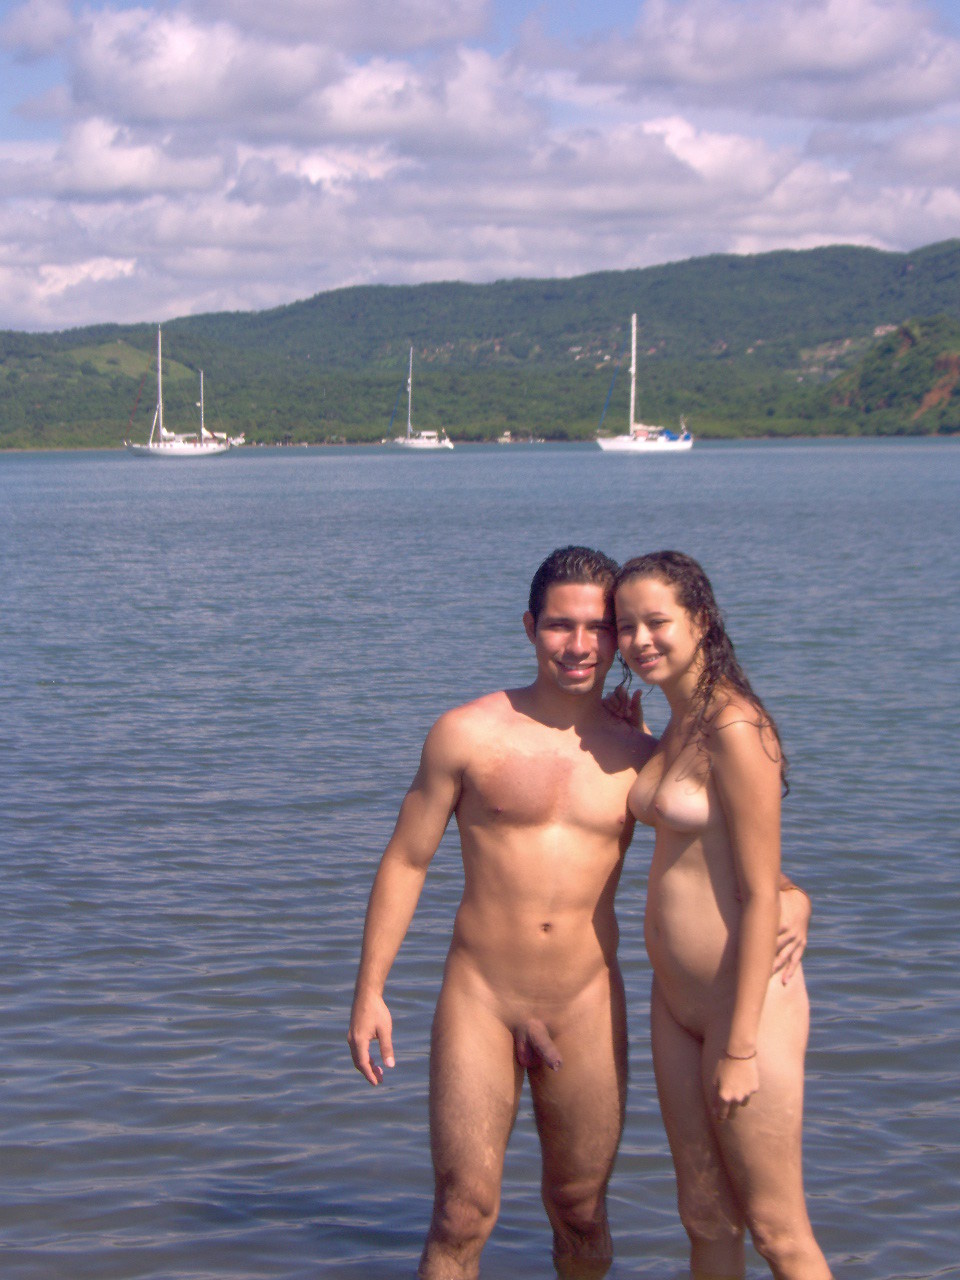 https://www.nudismlife.com/galleries/nudists_and_nude/nudists_couple/nudists_nude_naturists_couple_1896.jpg